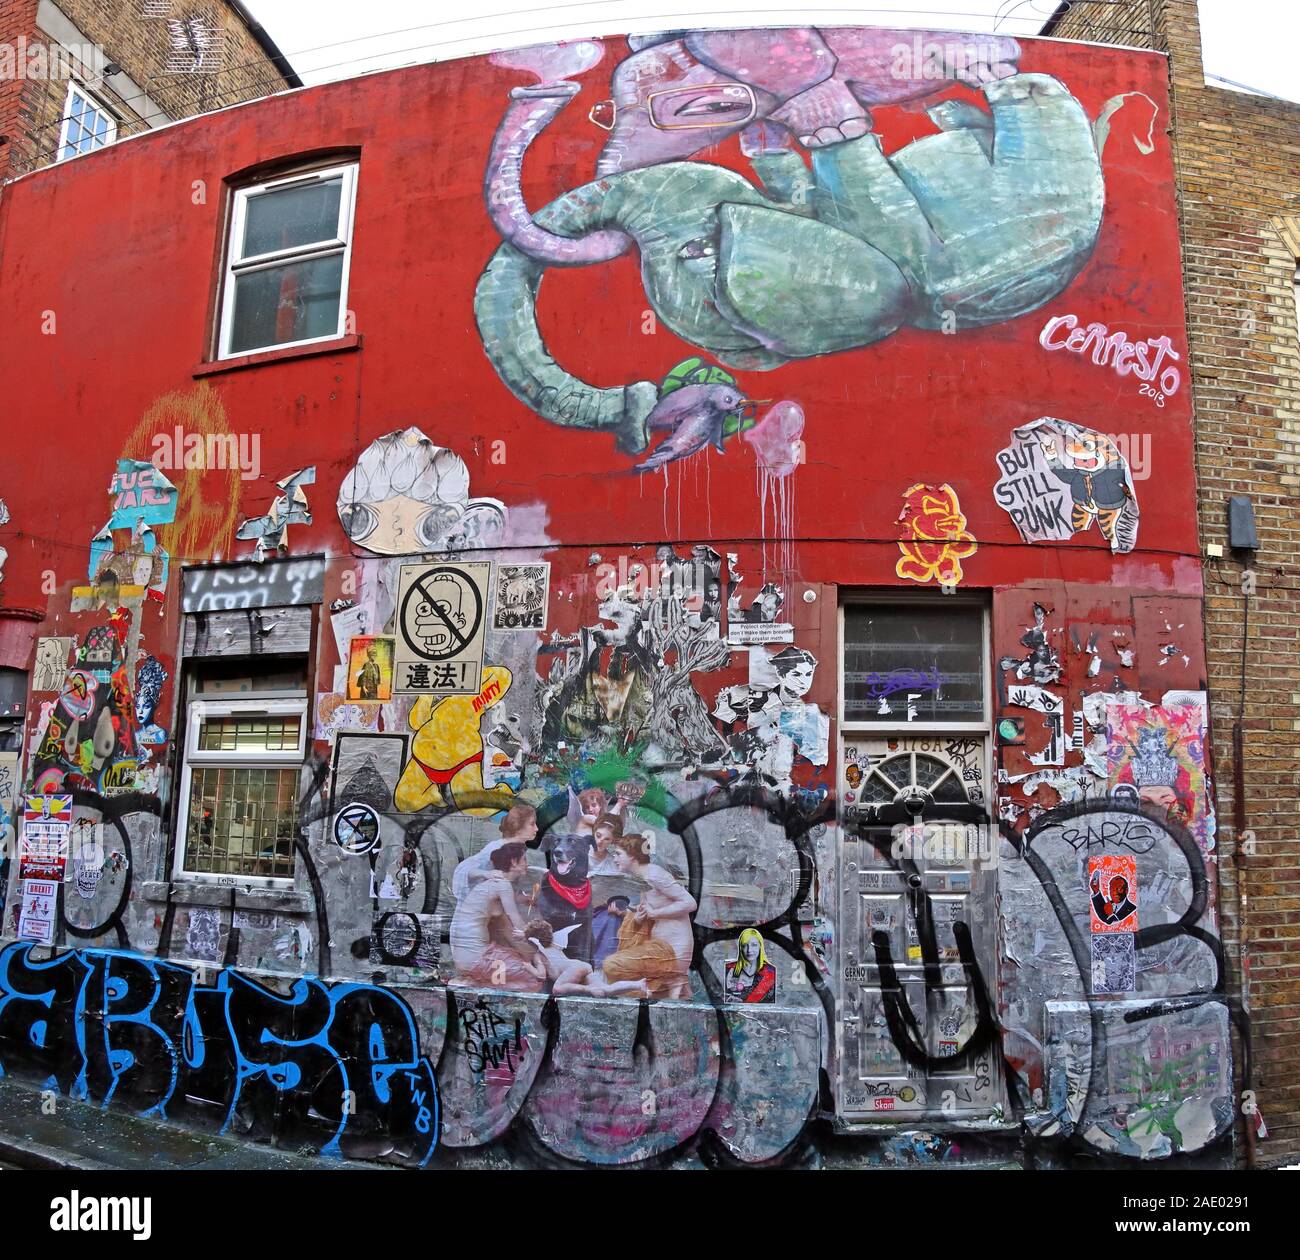 Elefant, Abuse Tag, Brick Lane, Kunst und Graffiti, Shoreditch, Tower Hamlets, East End, London, Südosten, England, Großbritannien, E1 6QL Stockfoto